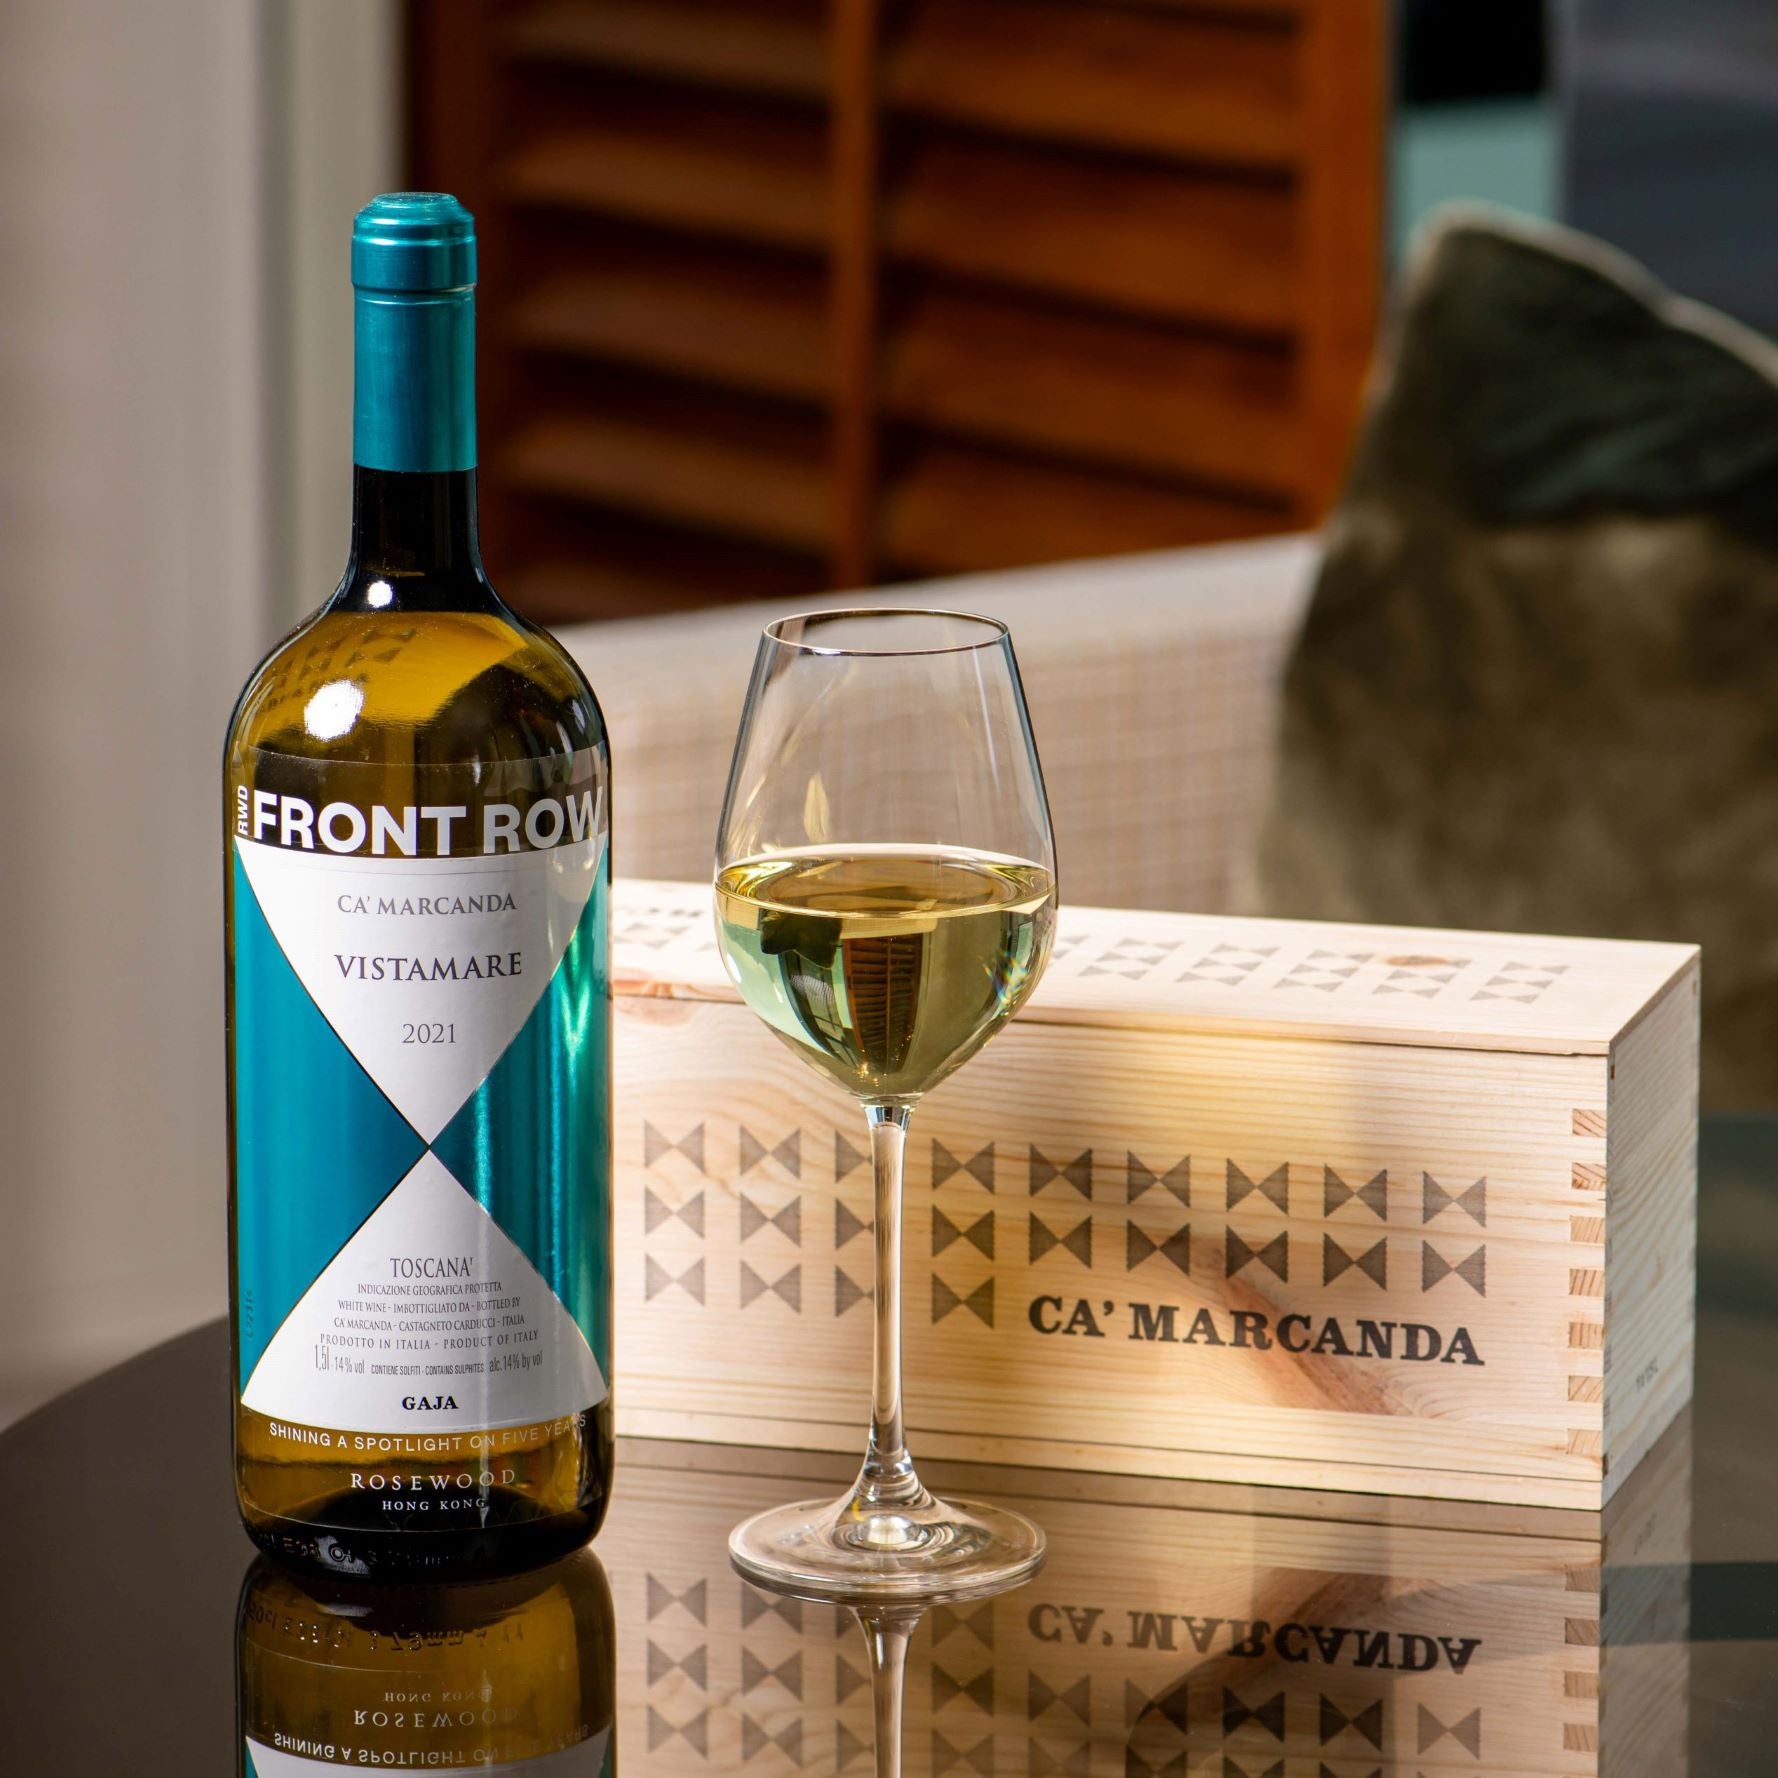 5th Anniversary Limited Edition Gaja Ca'marcanda Vistamare White Wine